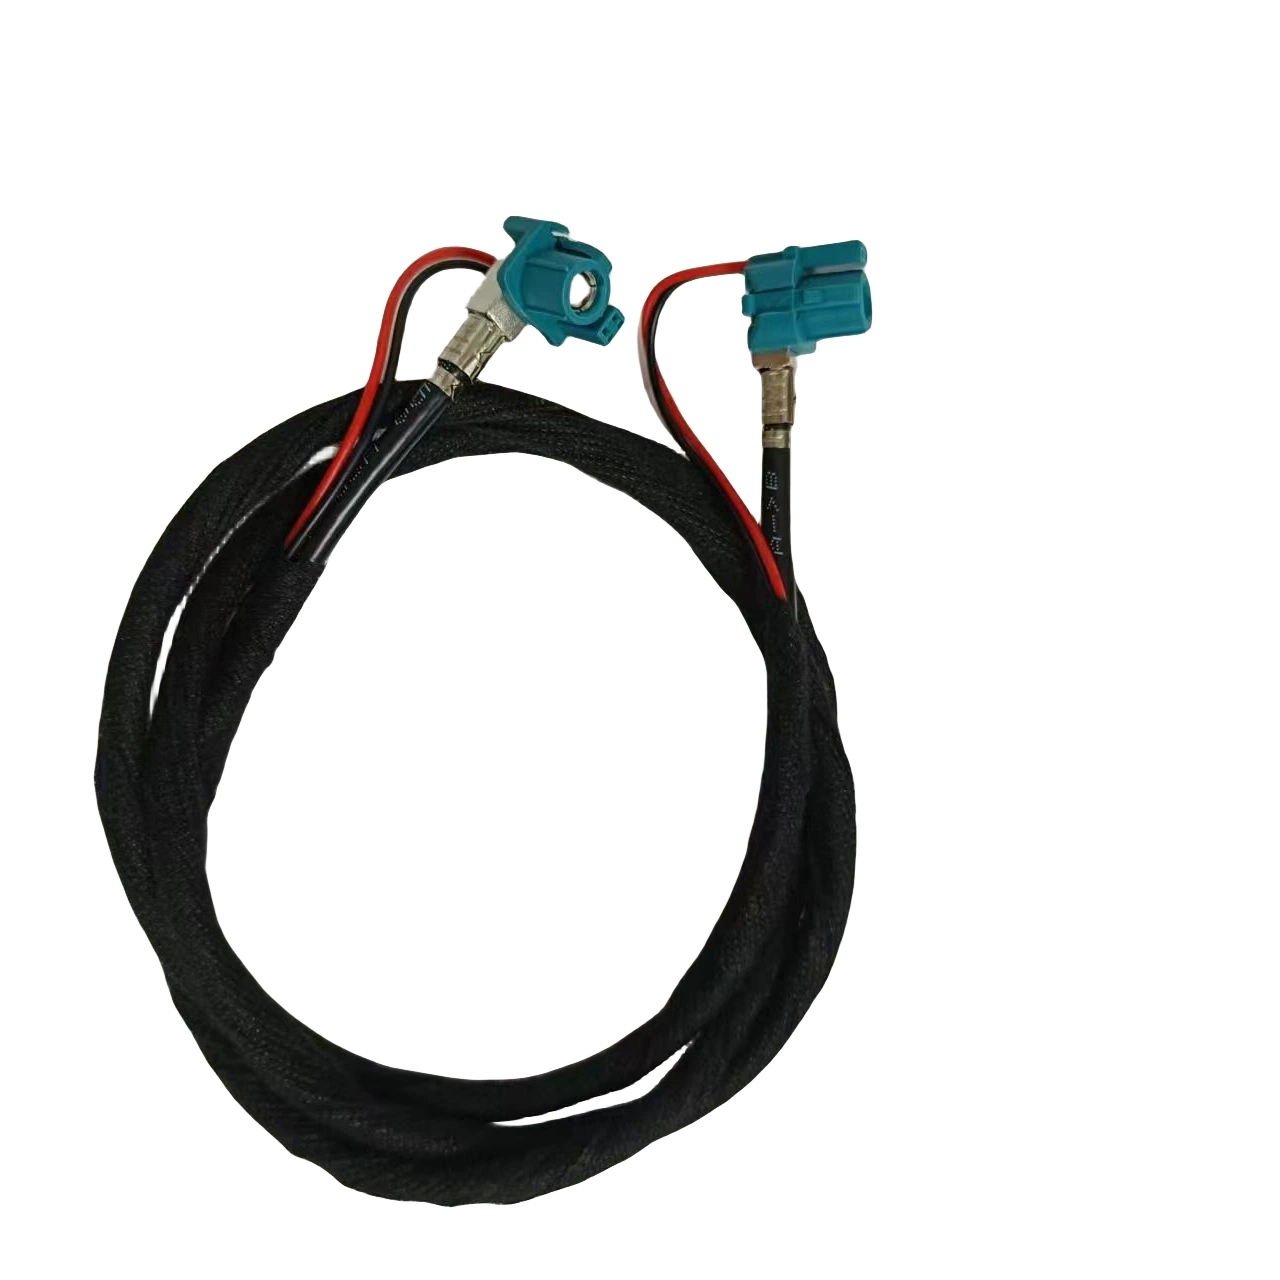 Car Audio Cable de extensión USB Aux in /out 4 pin Cable Car Cable LVDS para Trumpchi / Byd